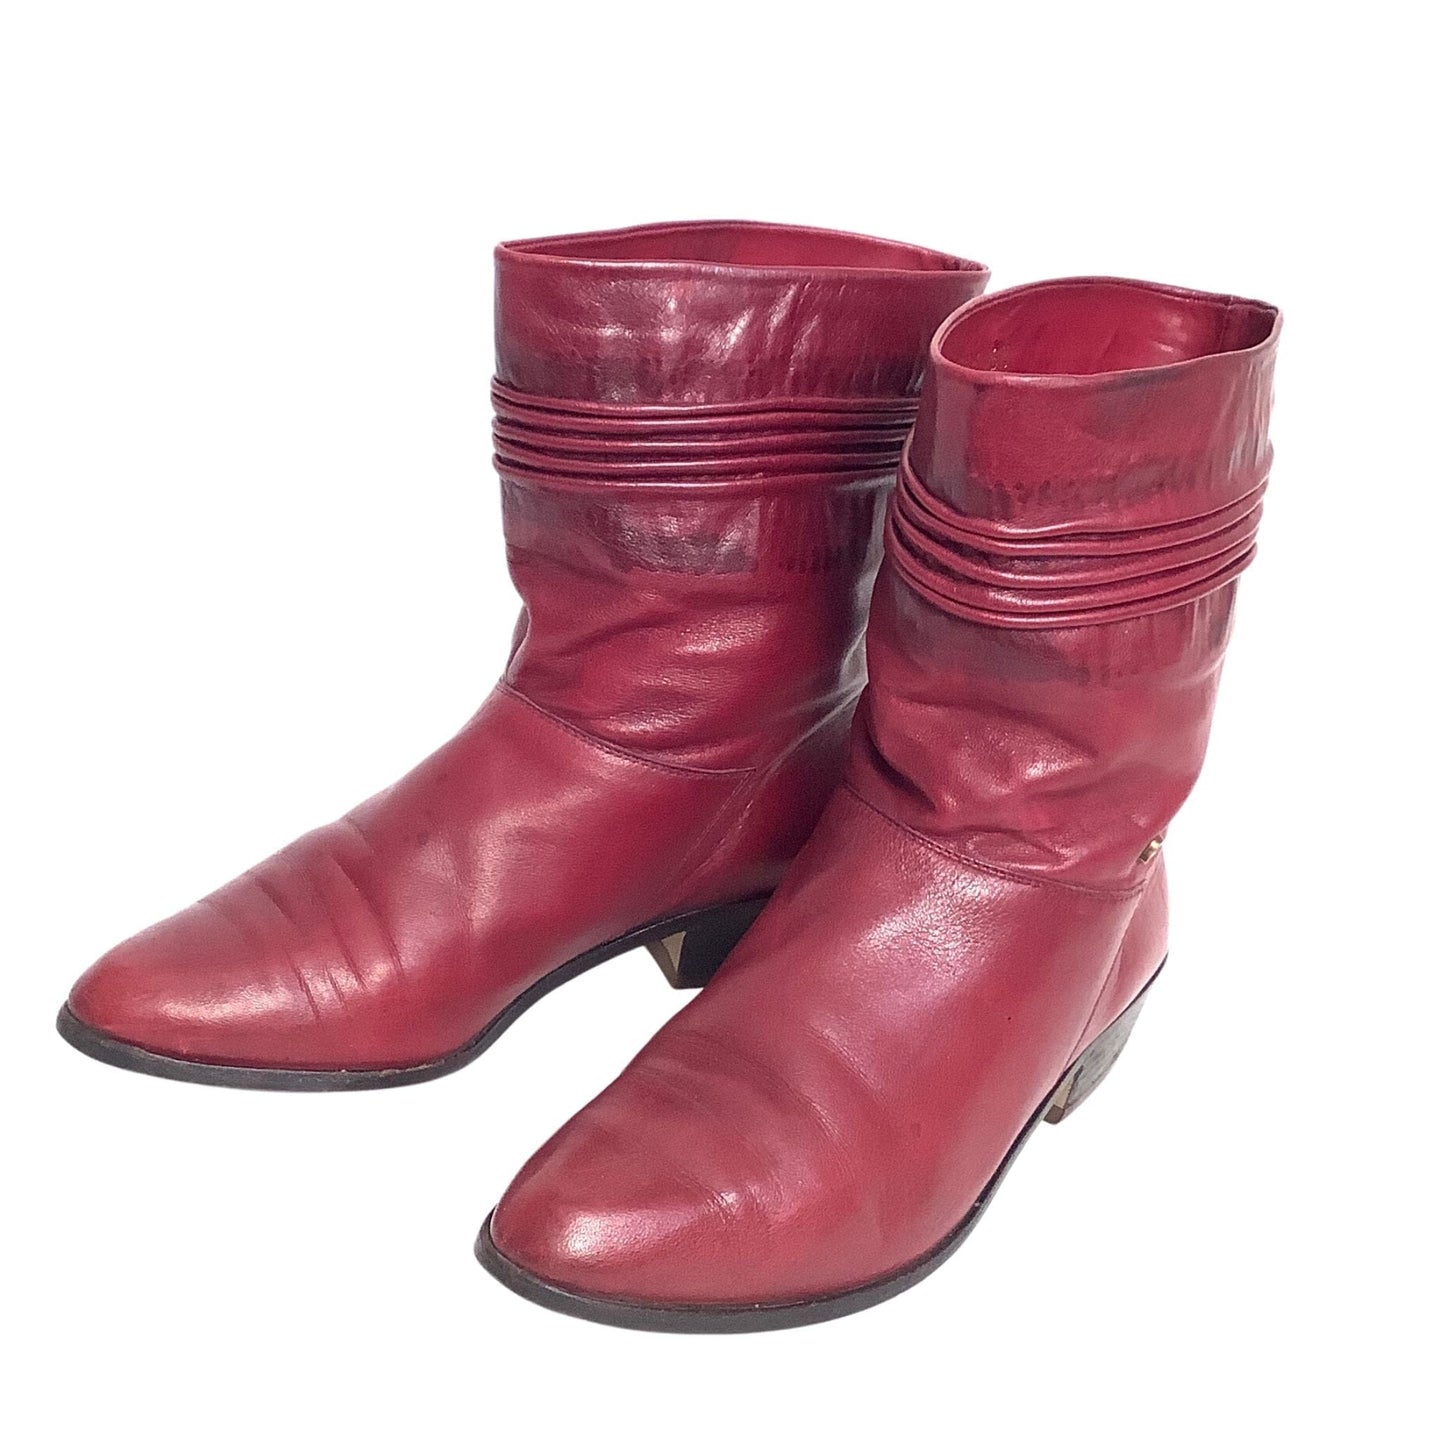 Vintage Aigner Slouch Boots 6 / Burgundy / Vintage 1970s